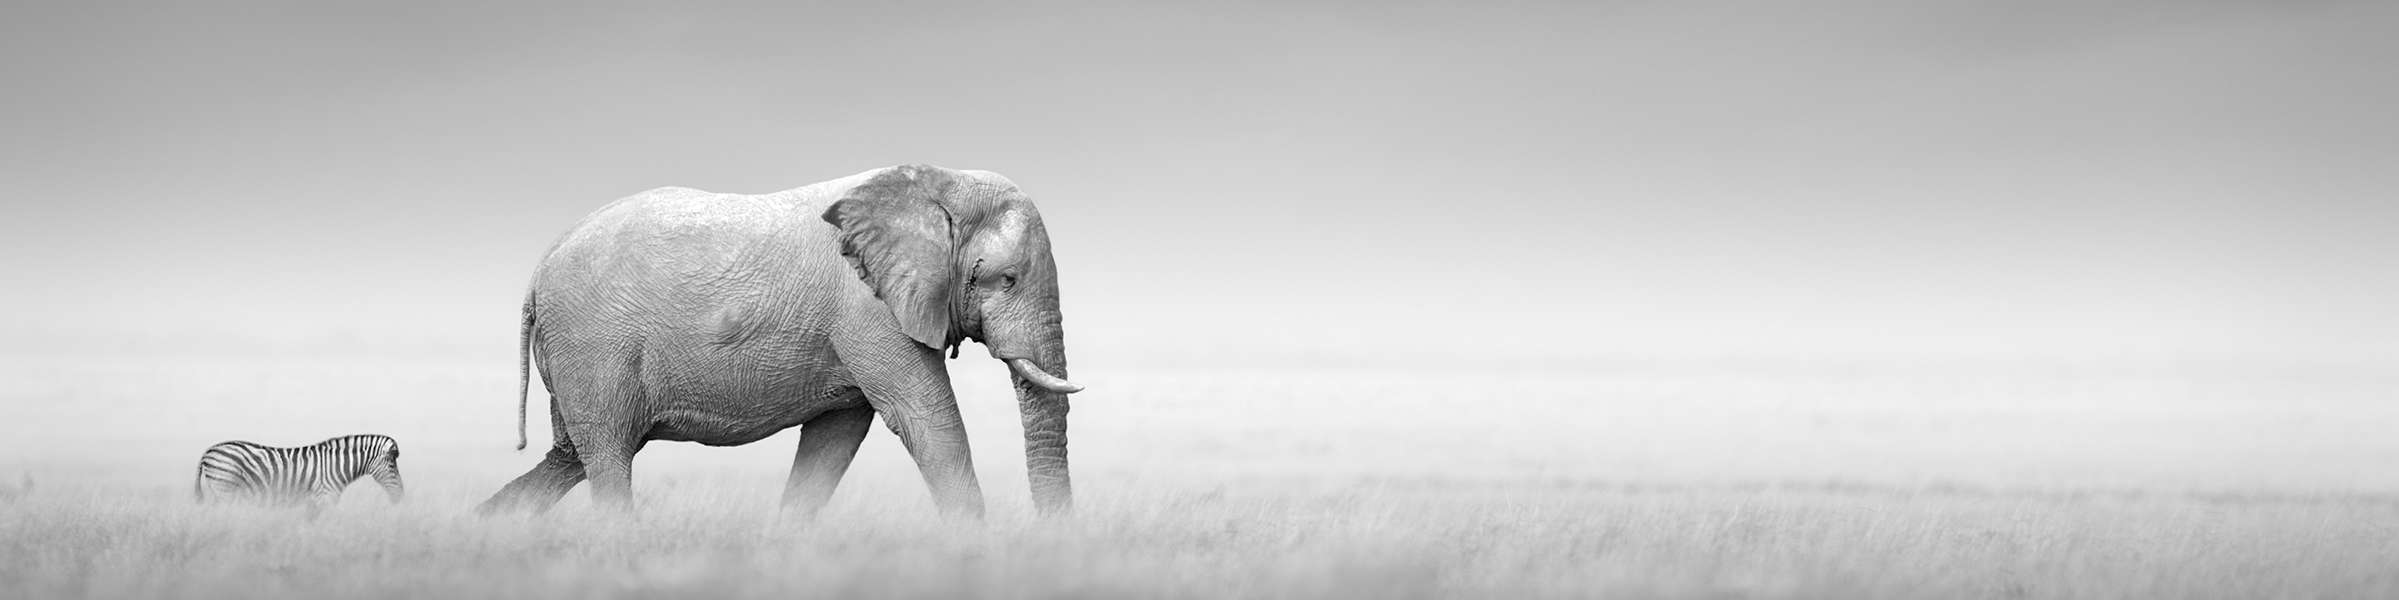 Wildes Afrika | Zebra & Elefant